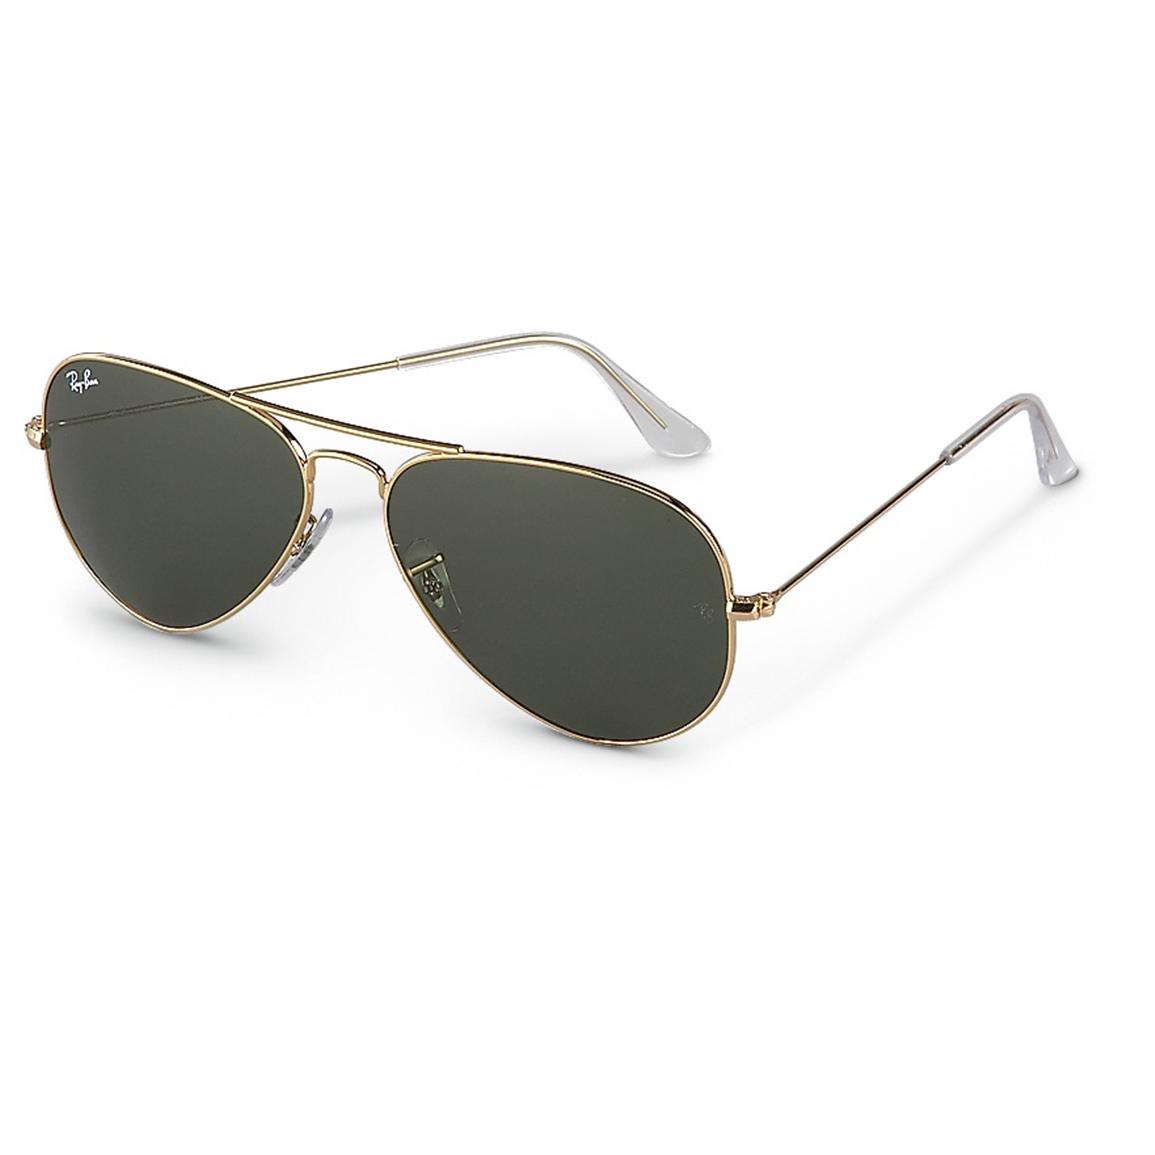 Ray Ban Sunglasses For Pilots